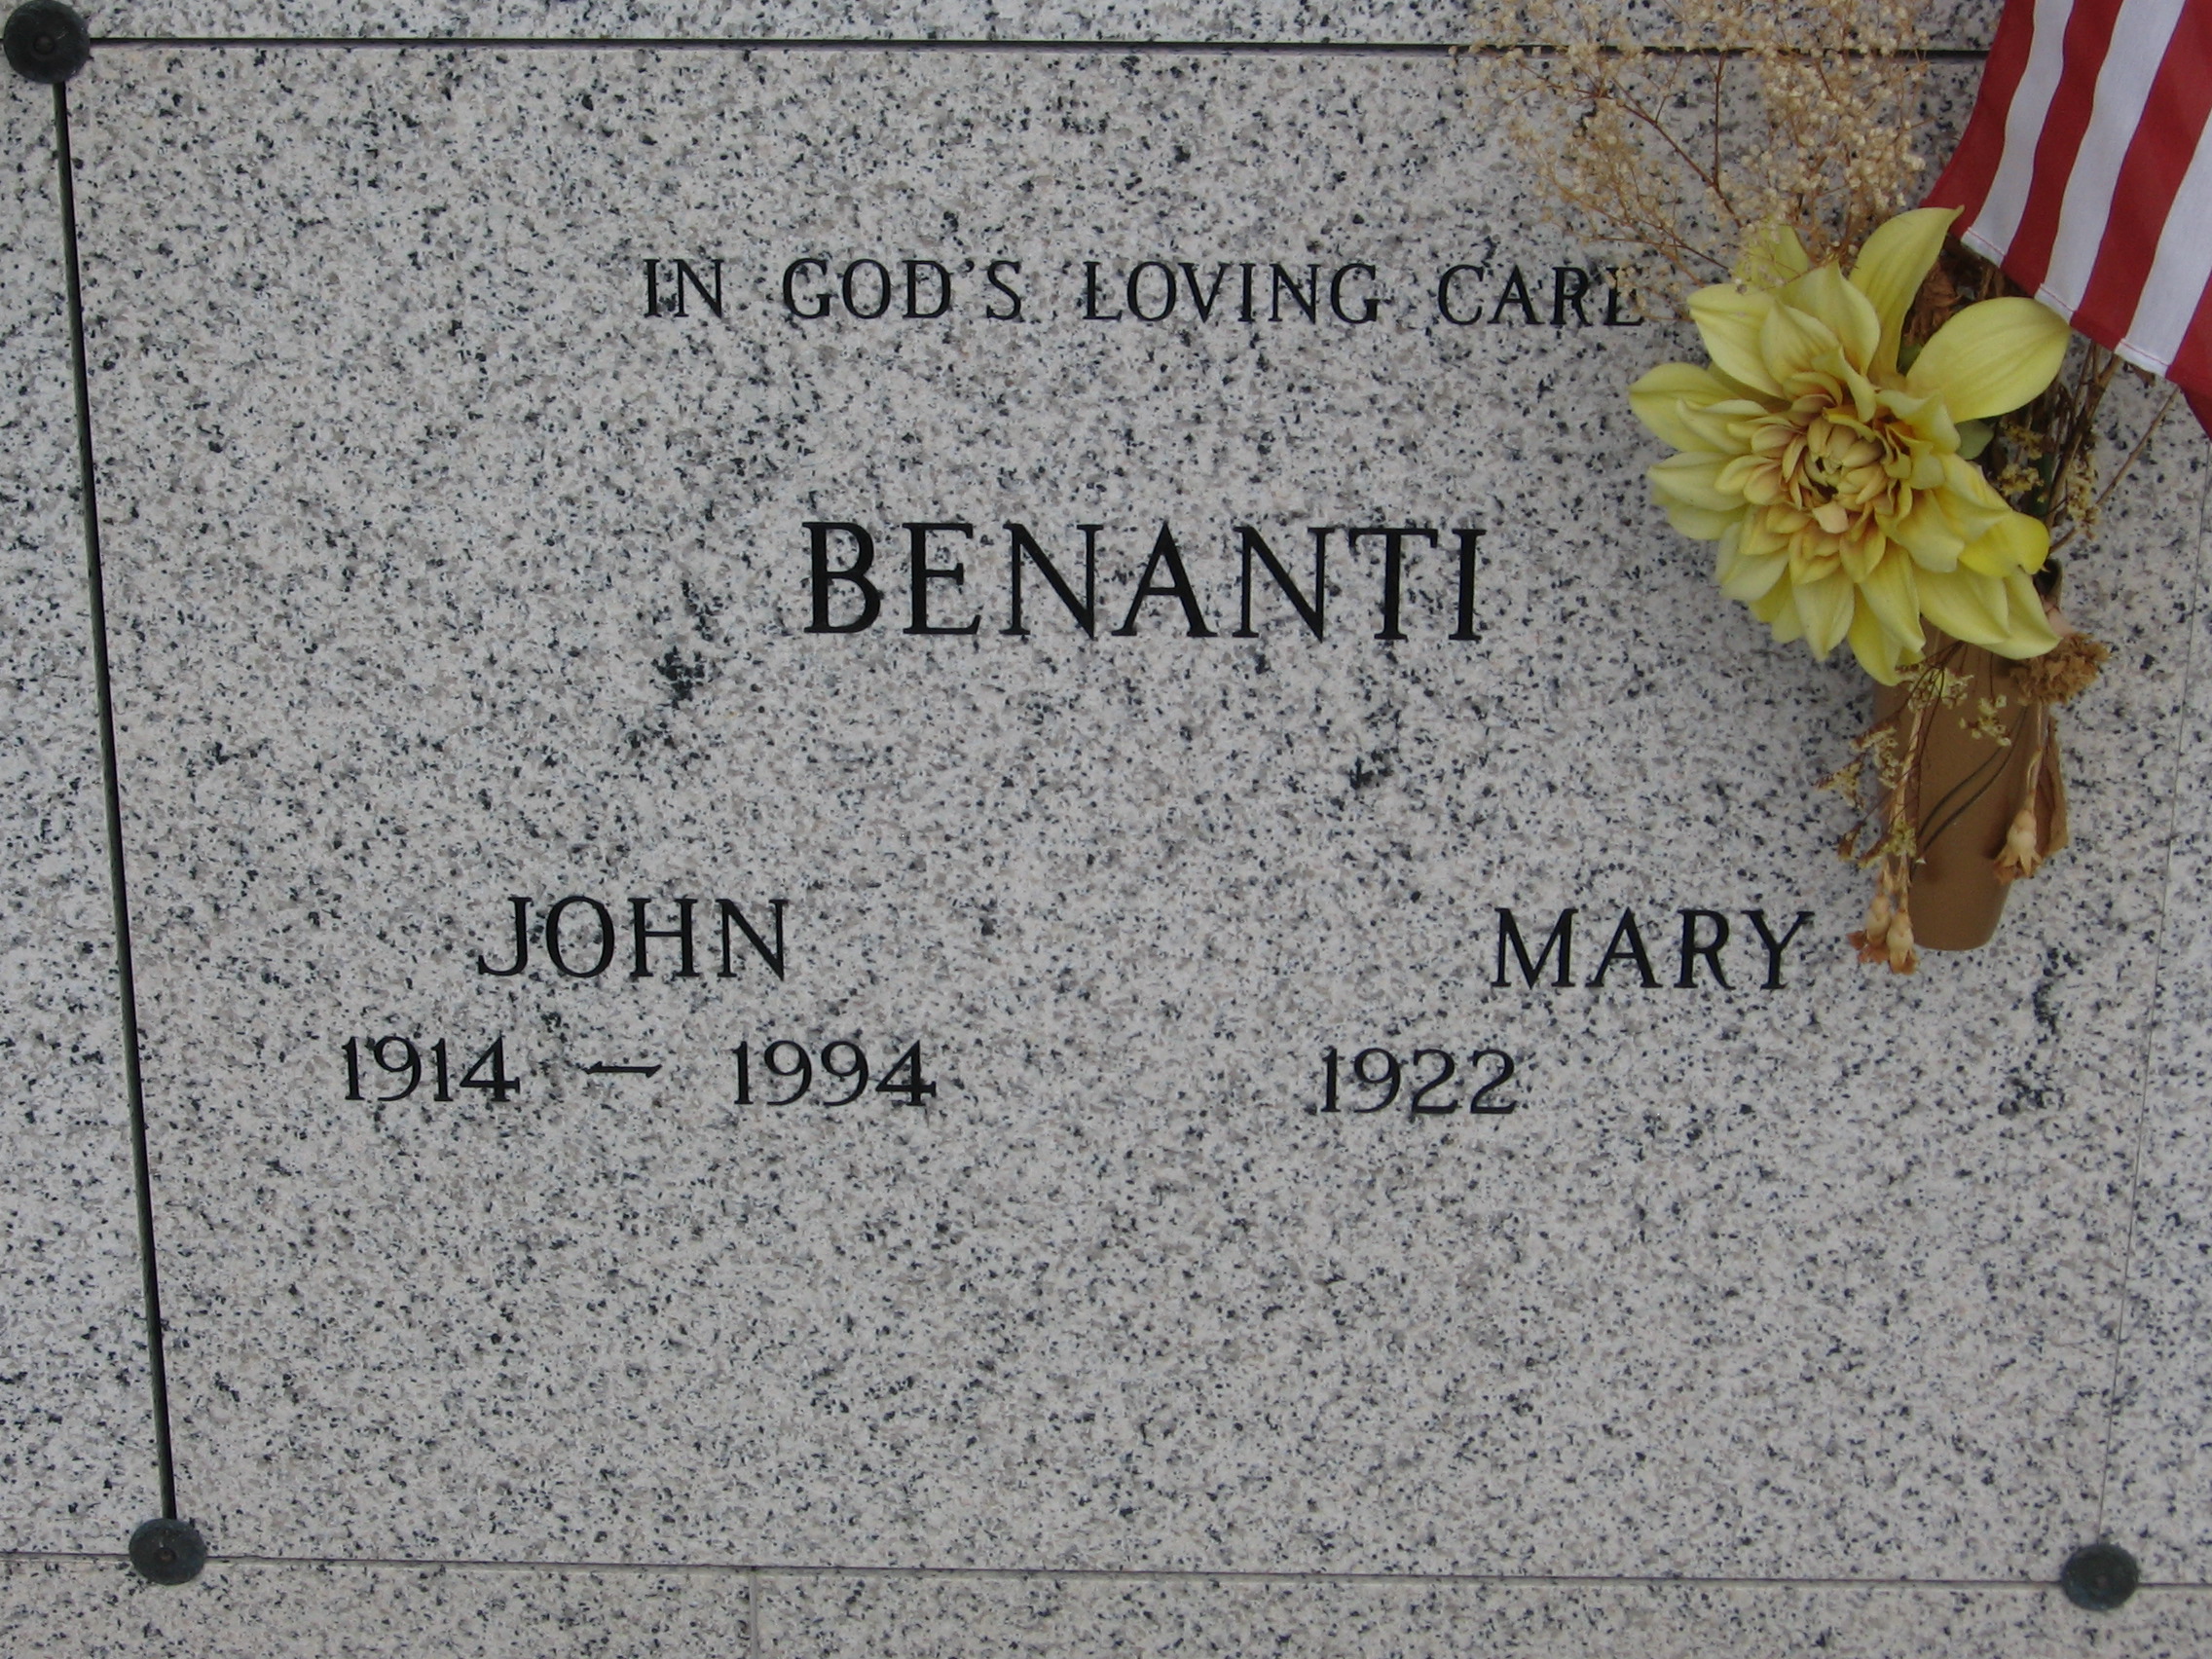 Mary Benanti